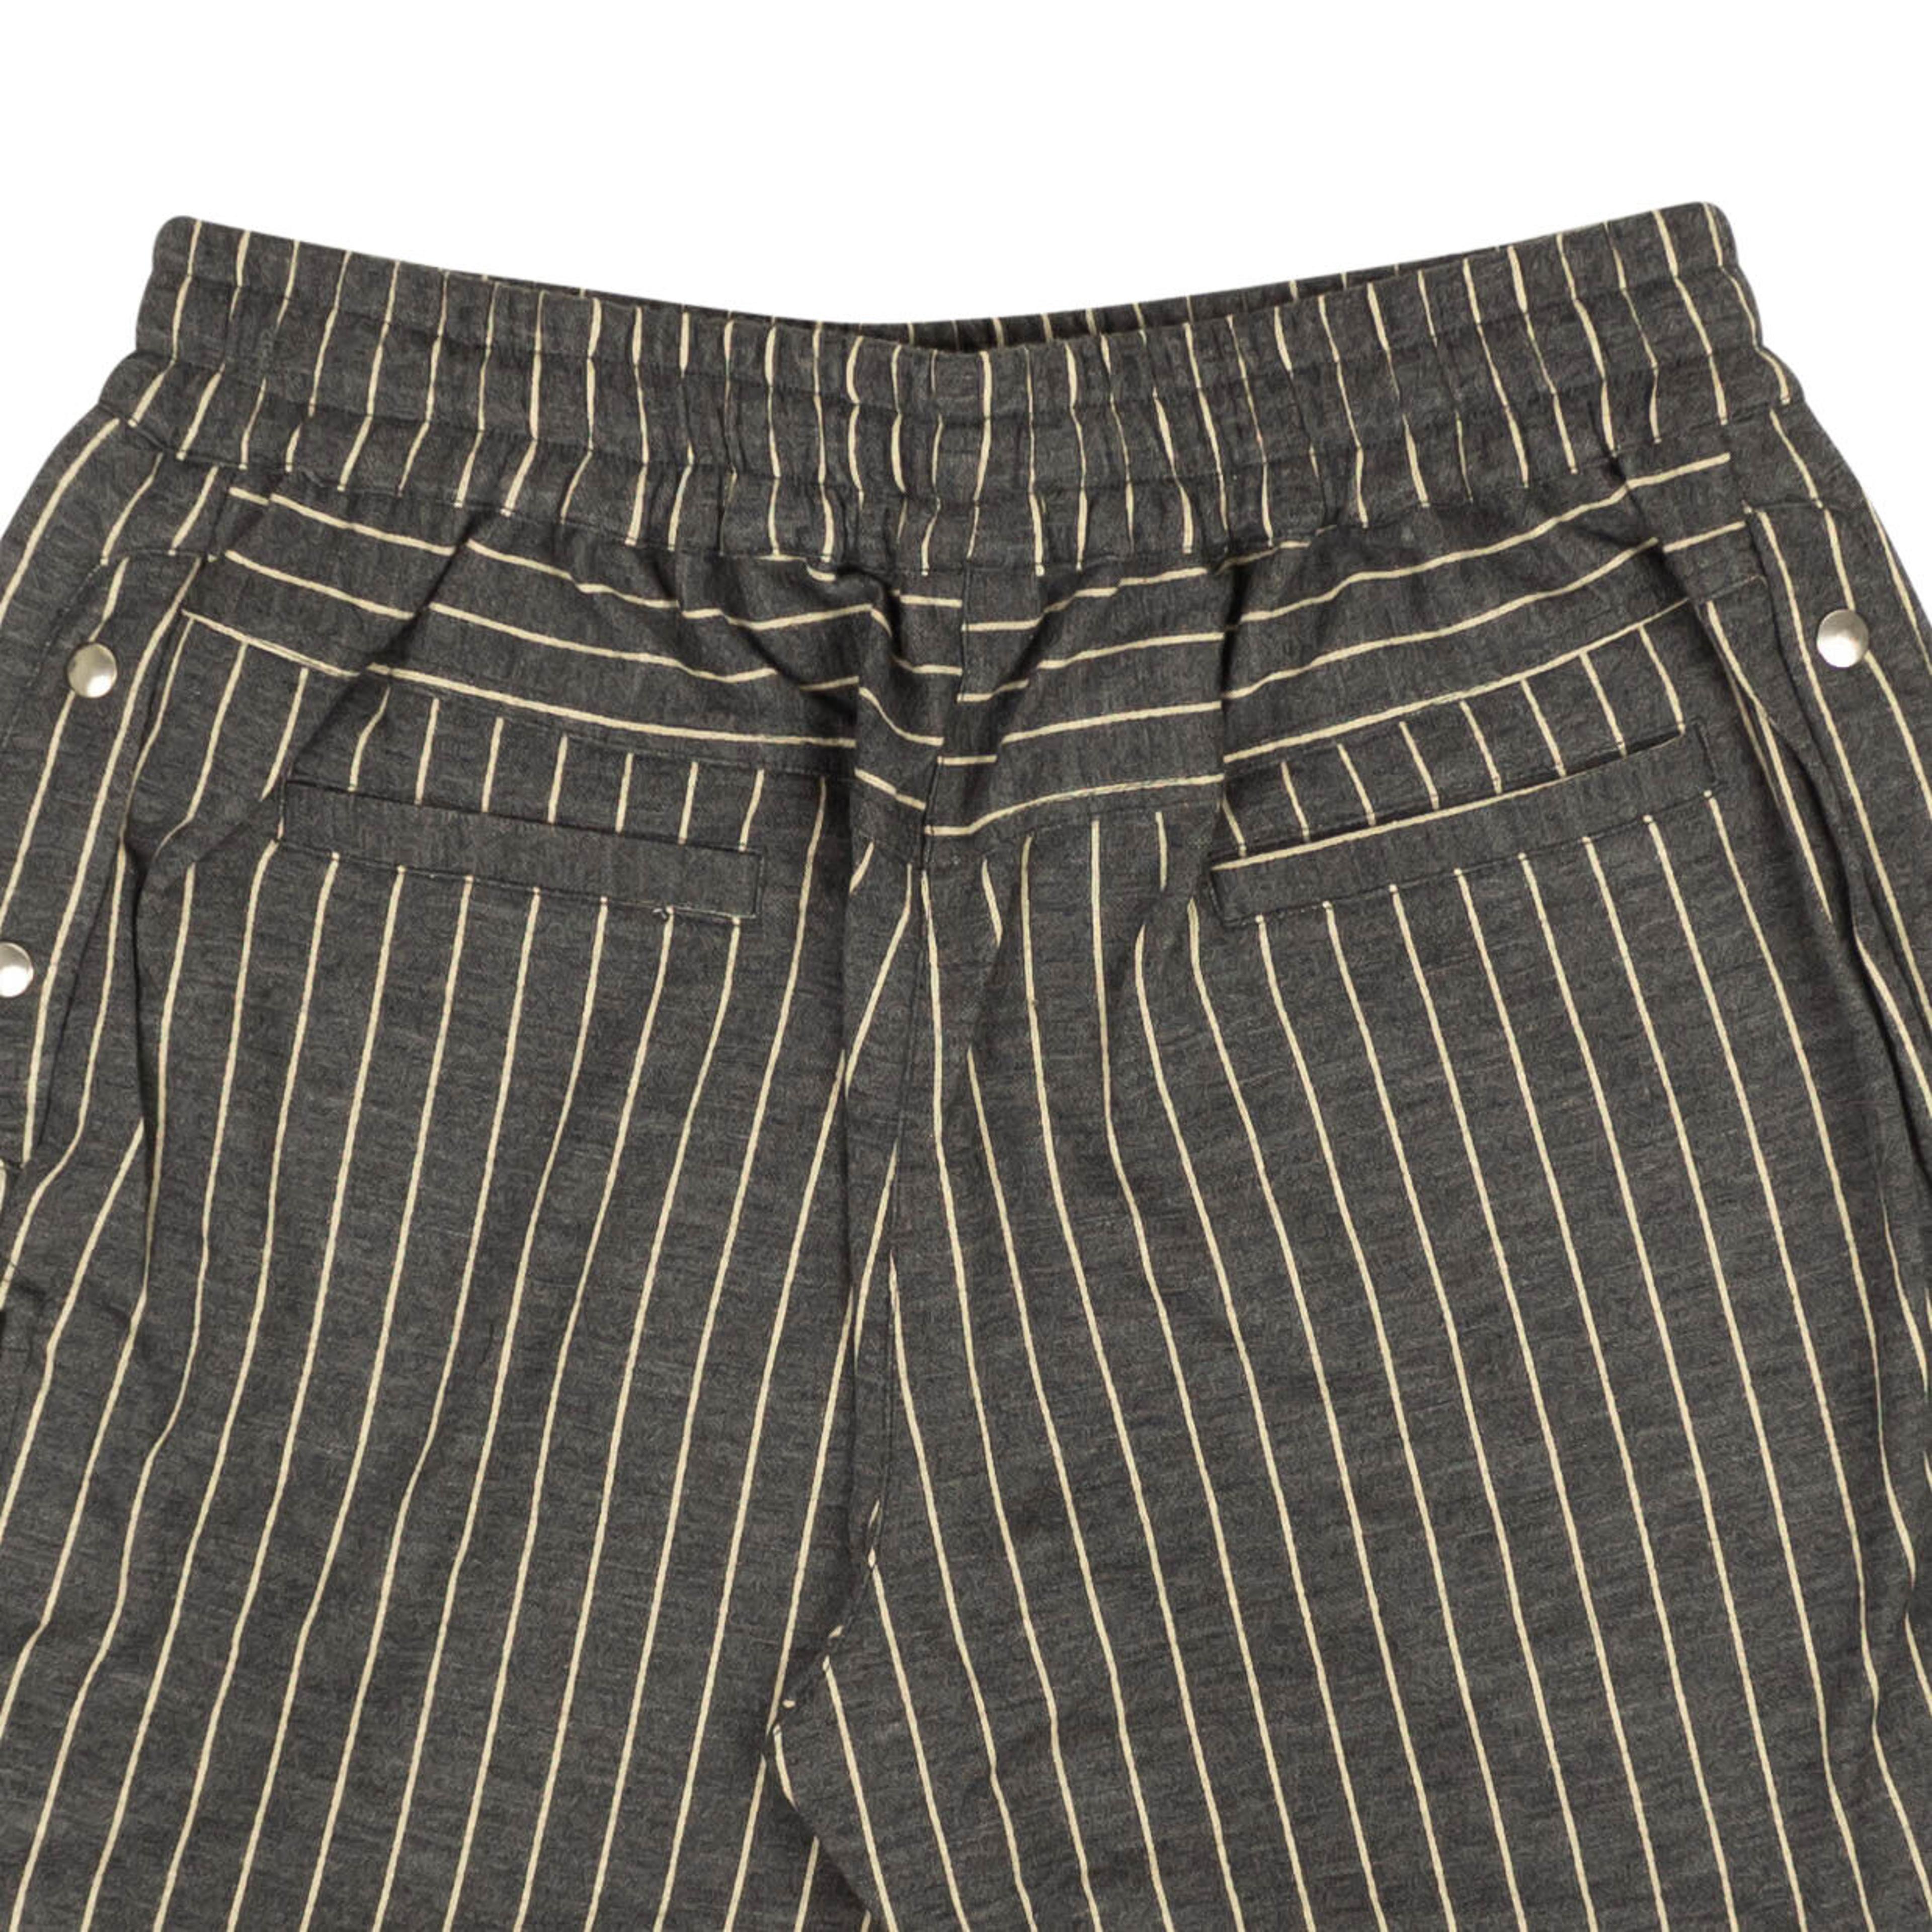 Alternate View 3 of Grey White Pinstripe Wool Blend Shorts